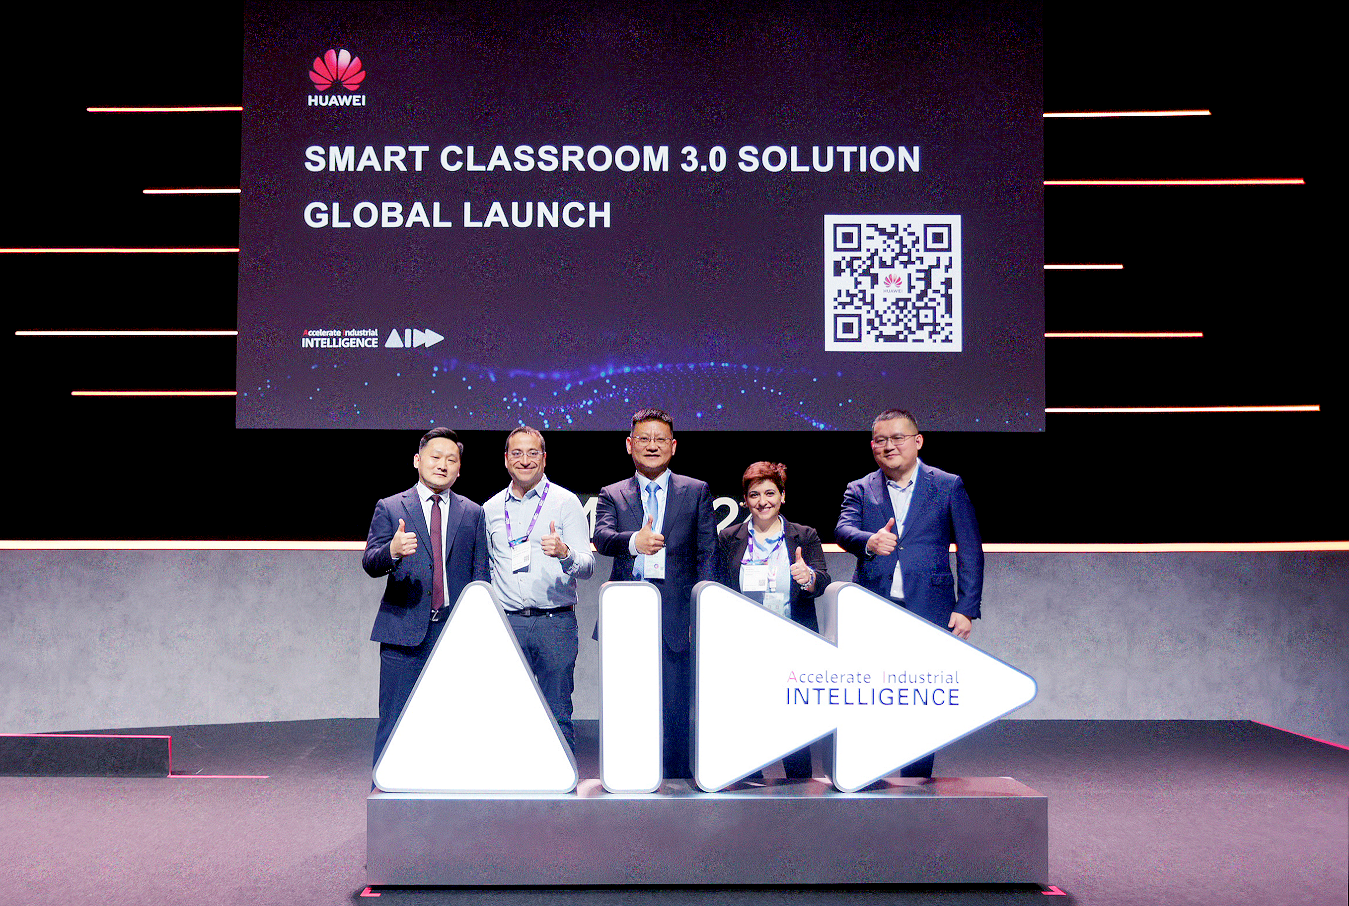 Huawei smart classroom 3